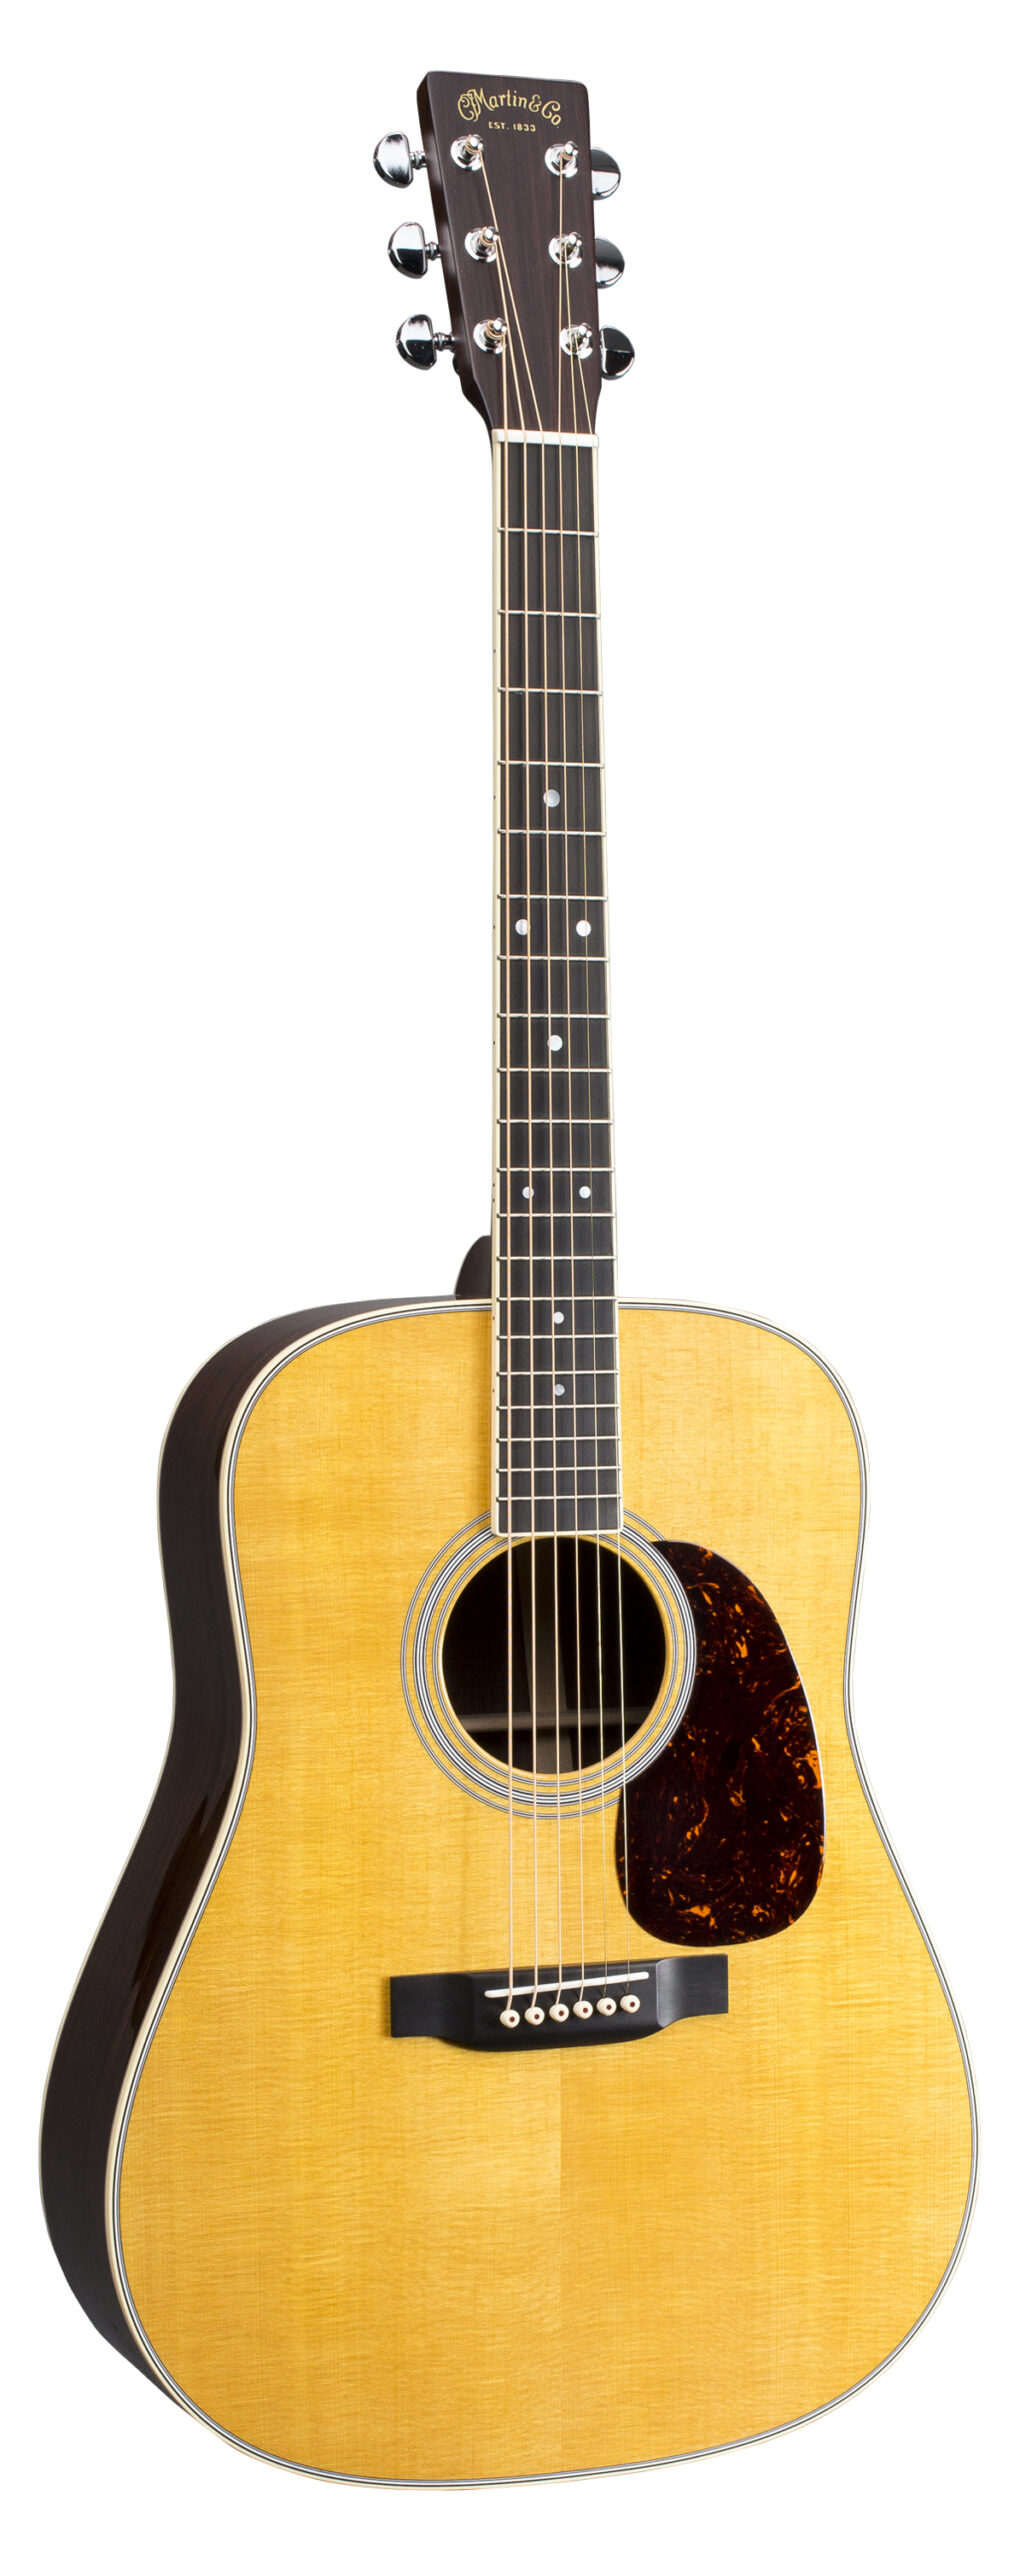 Martin D-35 Acoustic Guitar